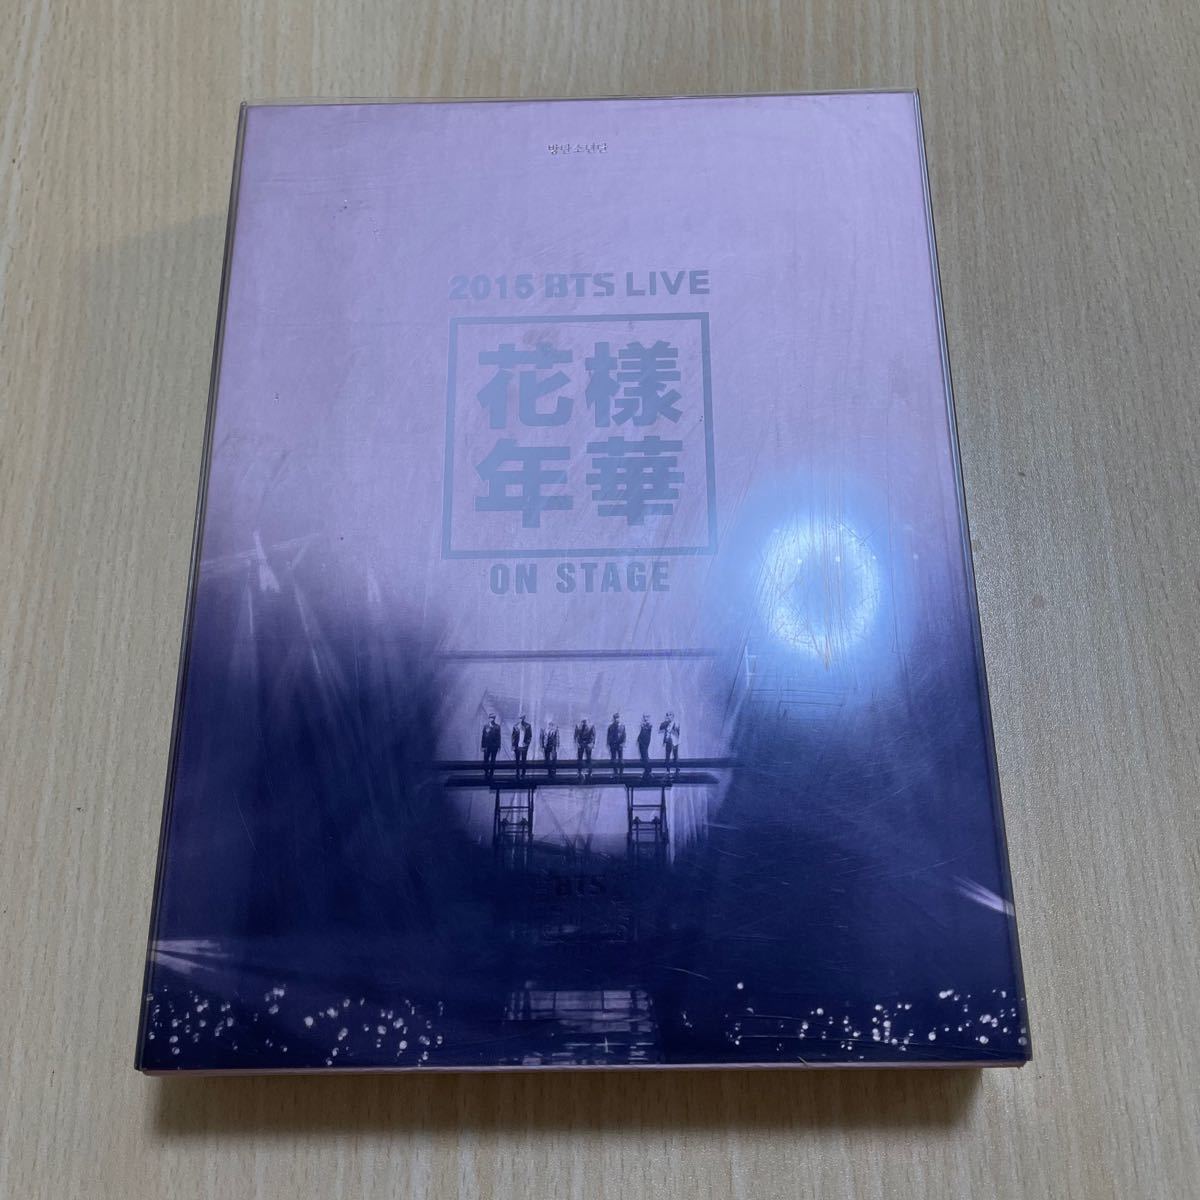 bts 2015 live 花様年華 on stage DVD 公式トレカ V テテ テヒョン